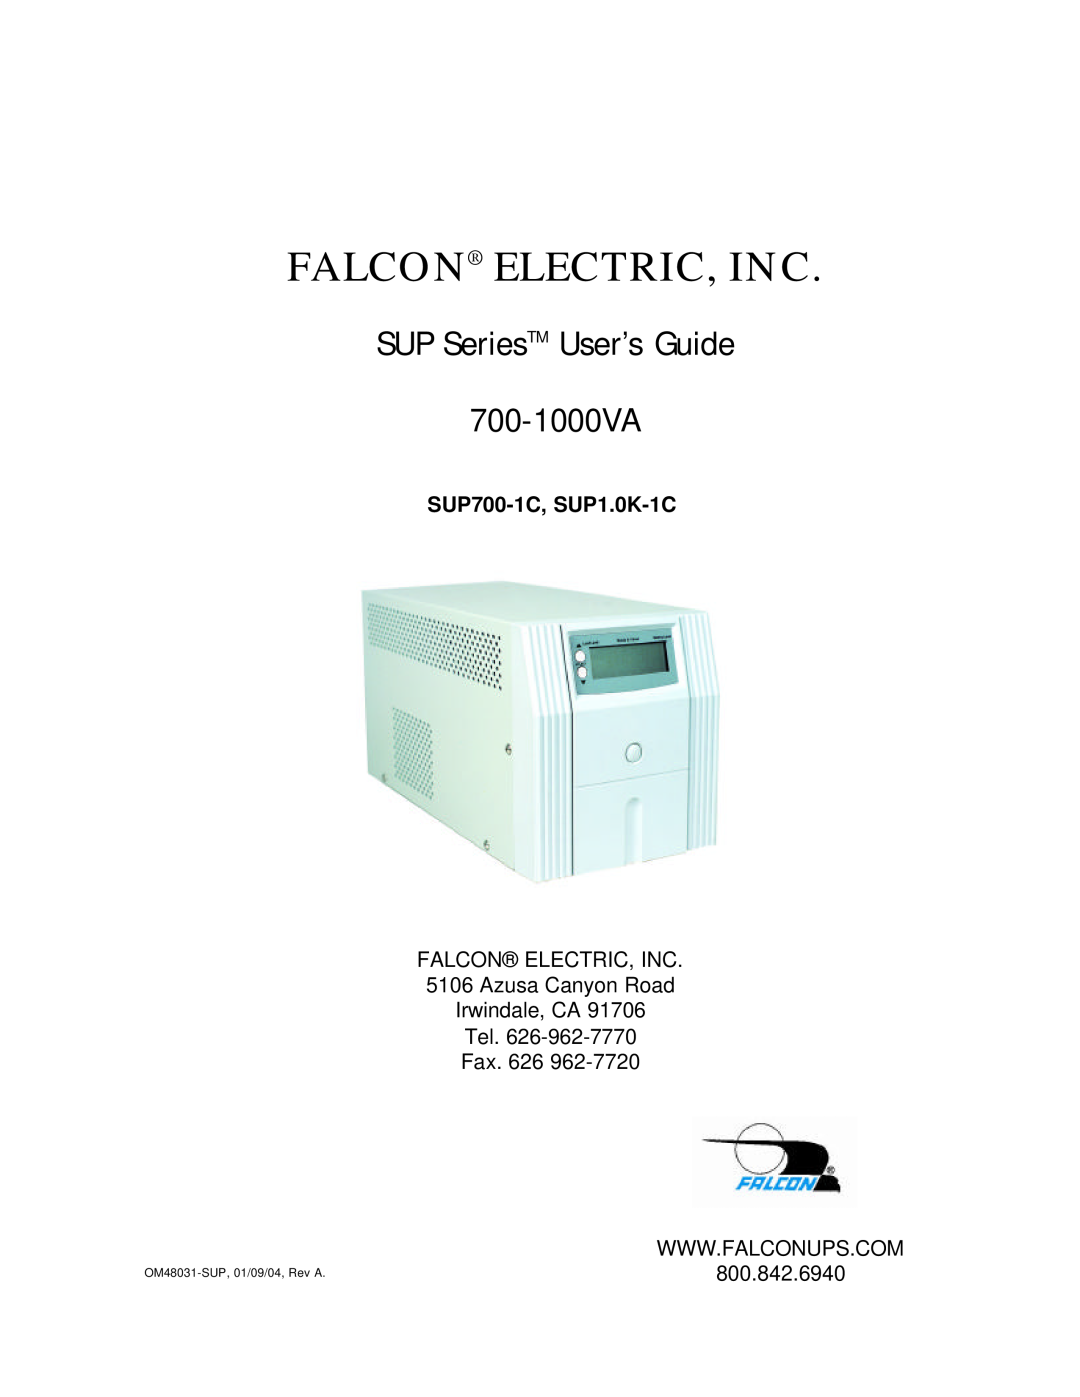 Falcon manual SUP700-1C, SUP1.0K-1C, Falcon Electric, Inc, SUP SeriesTM User’s Guide 700-1000VA 